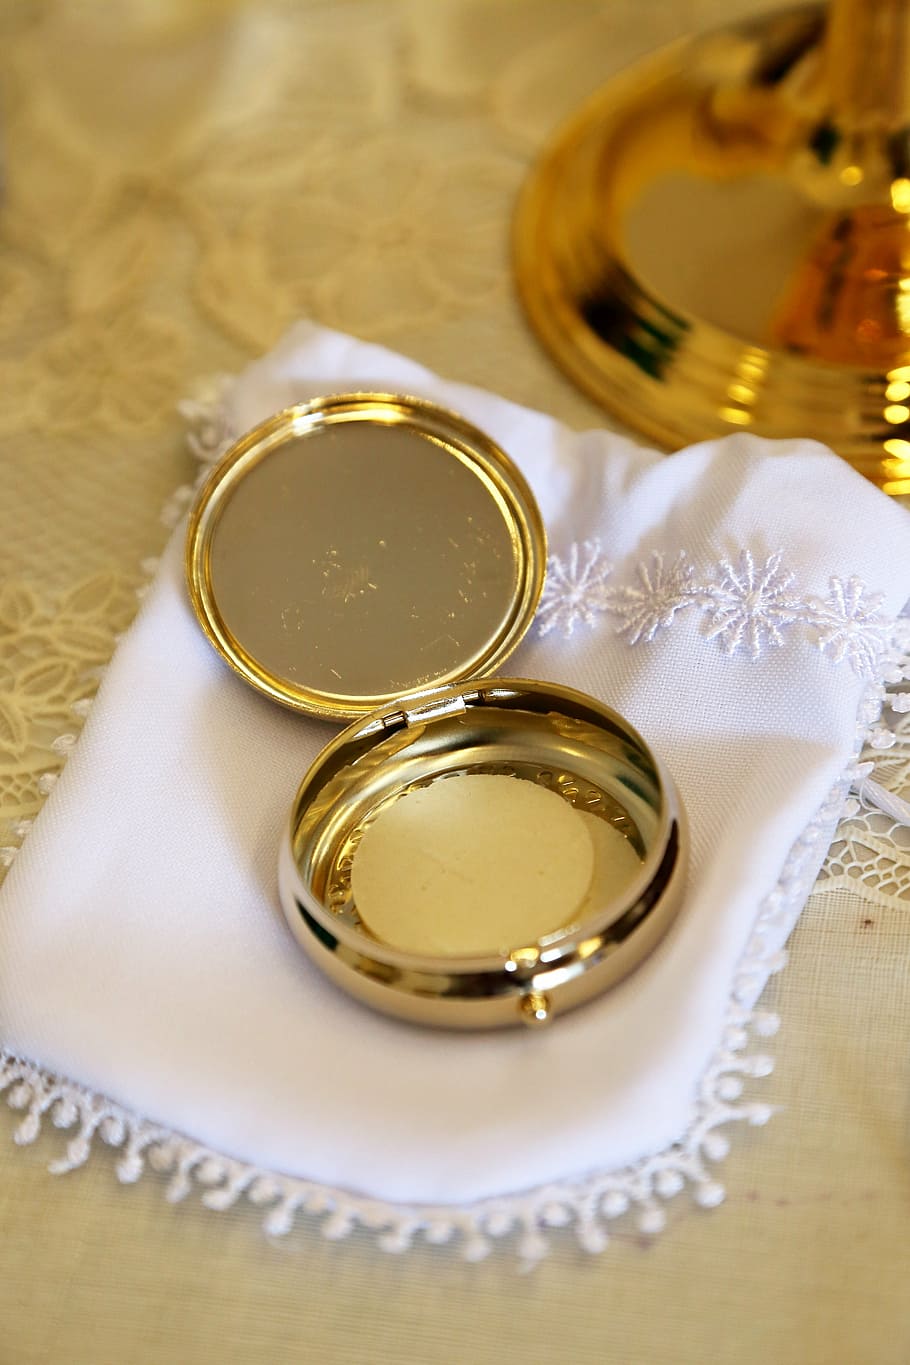 round gold-colored case, eucharist, host, communion, catholic, religion, christ, christian, christianity, sacrament